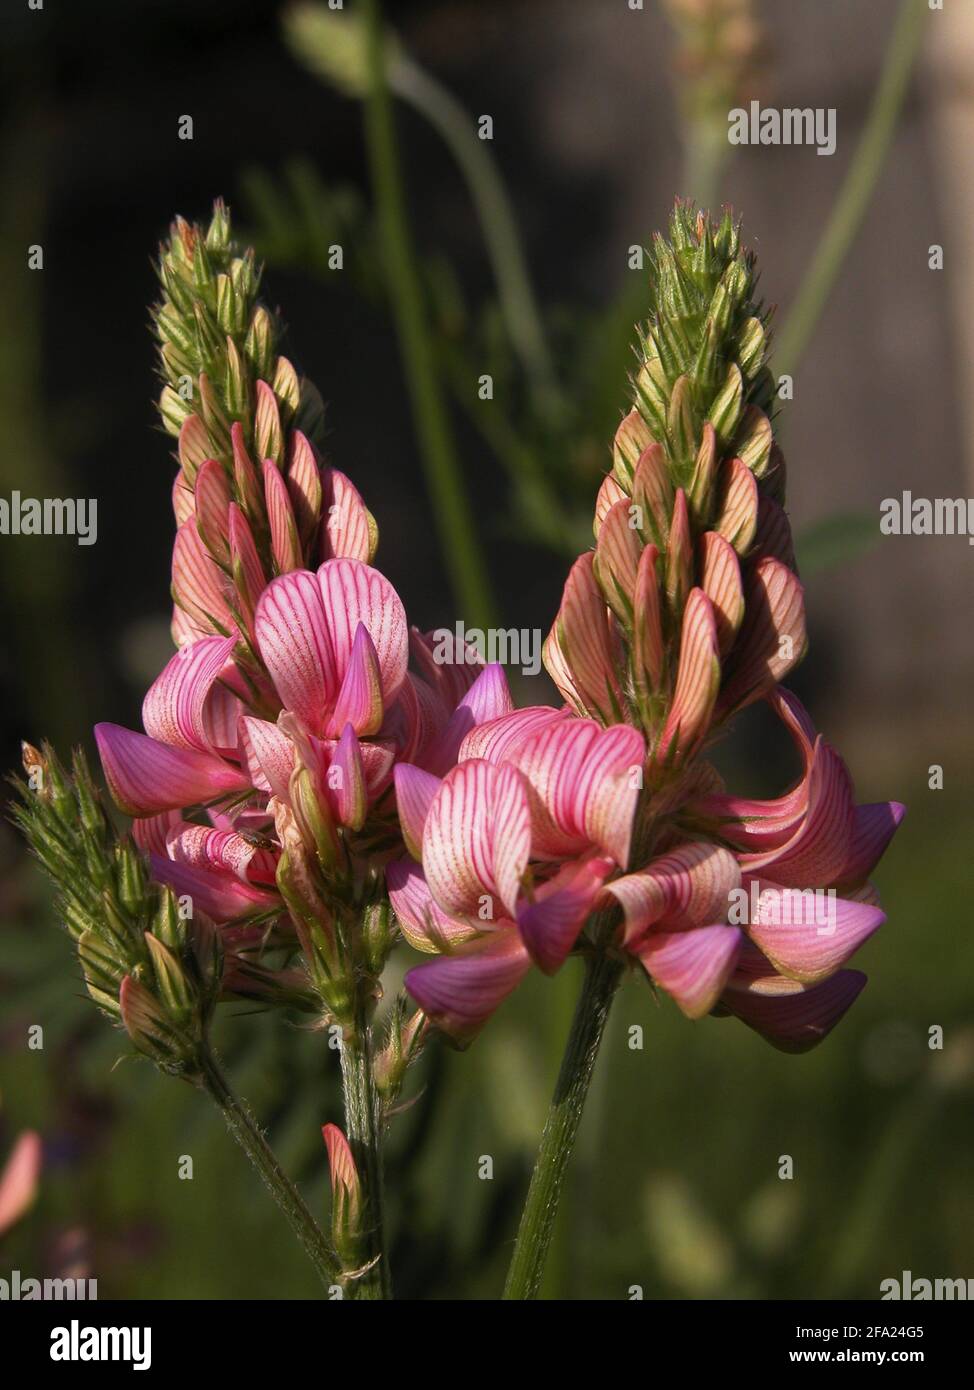 Comune sainfoina (Onobrychis vicifolia), fioritura, Austria Foto Stock